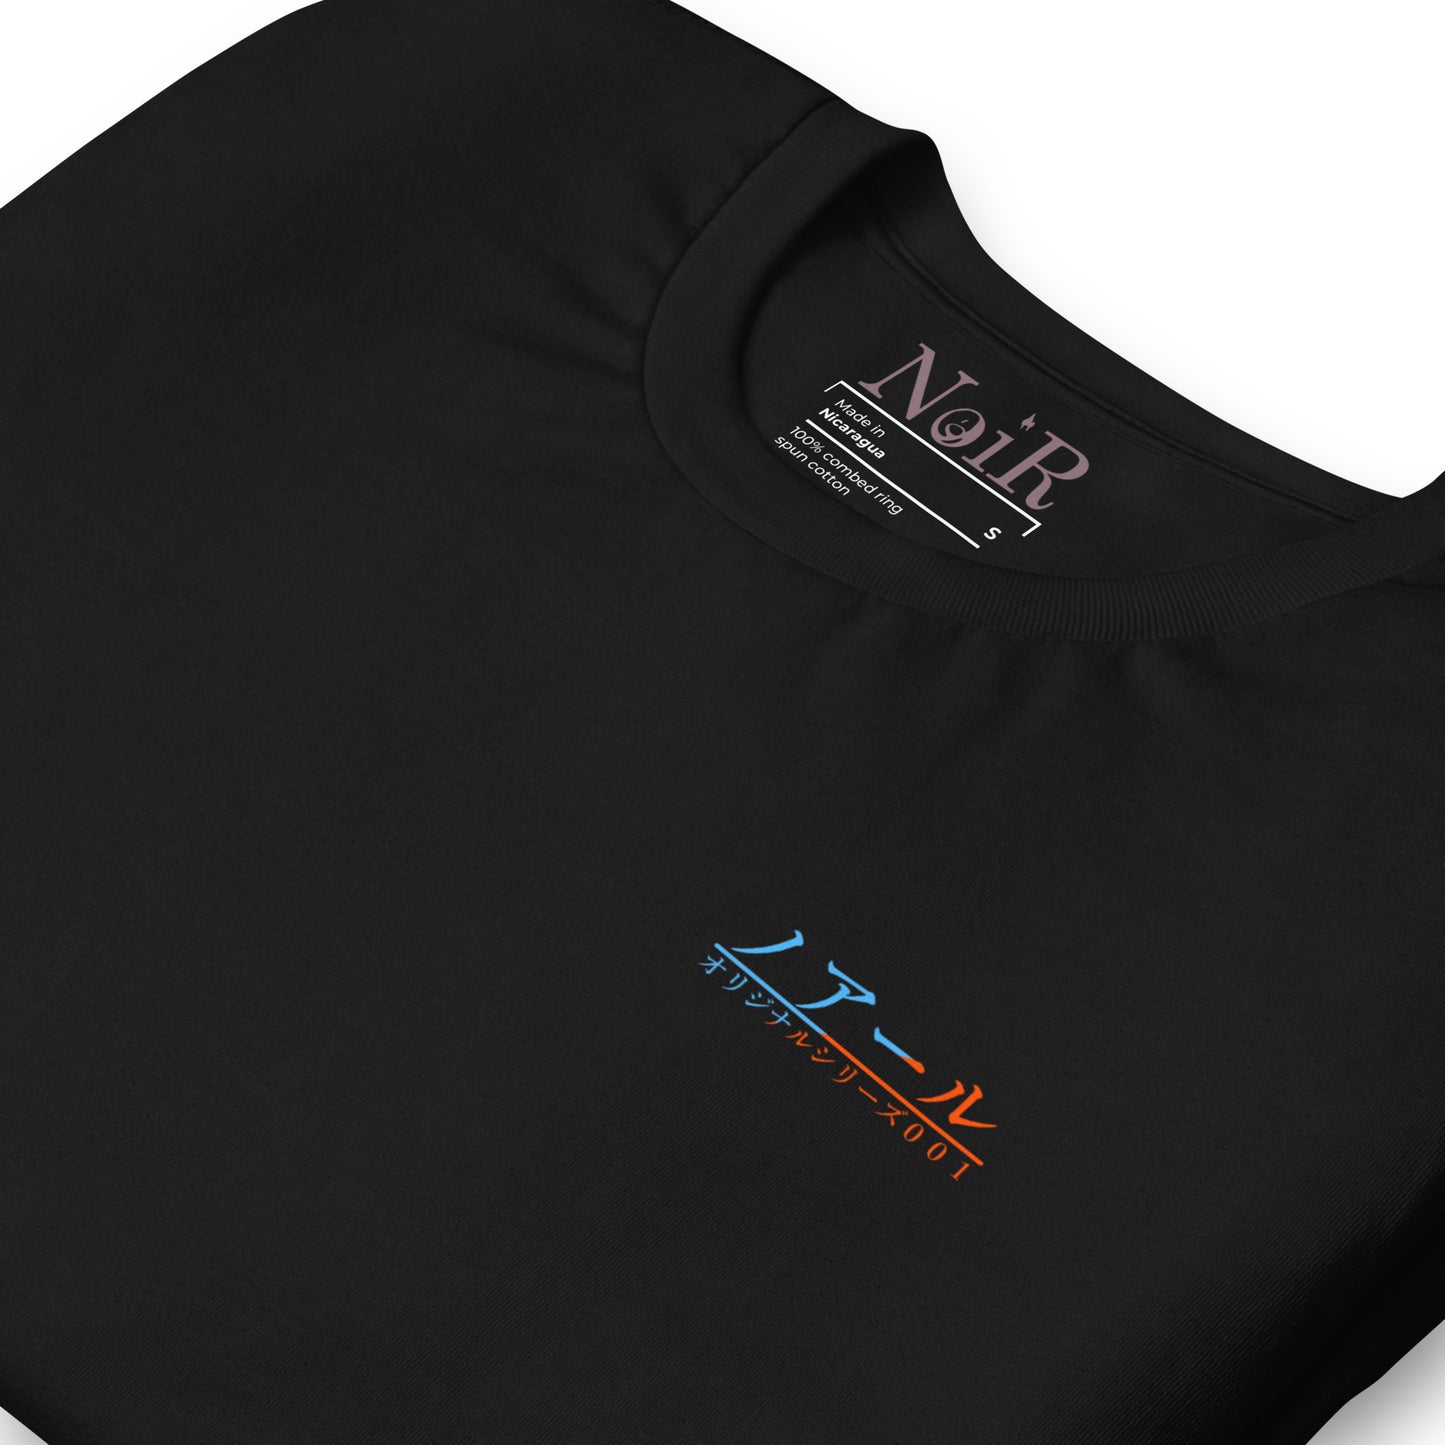 NoiR Original Series 001 "Nia" T-Shirt